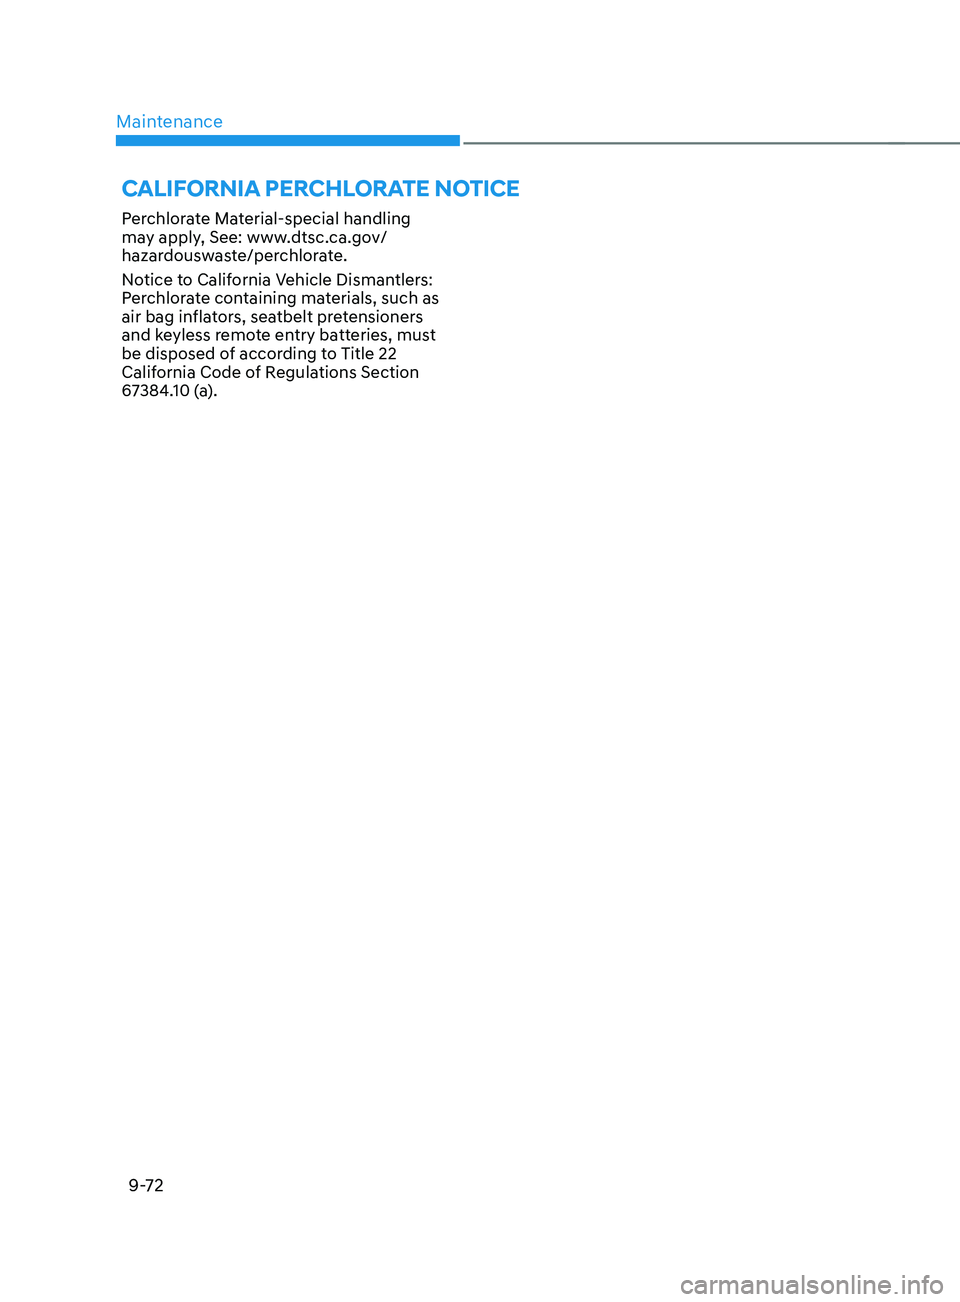 HYUNDAI SANTA FE 2021  Owners Manual Maintenance9-72
CALIFORNIA PERCHLORATE NOTICE
Perchlorate Material-special handling 
may apply, See: www.dtsc.ca.gov/
hazardouswaste/perchlorate.
Notice to California Vehicle Dismantlers: 
Perchlorate